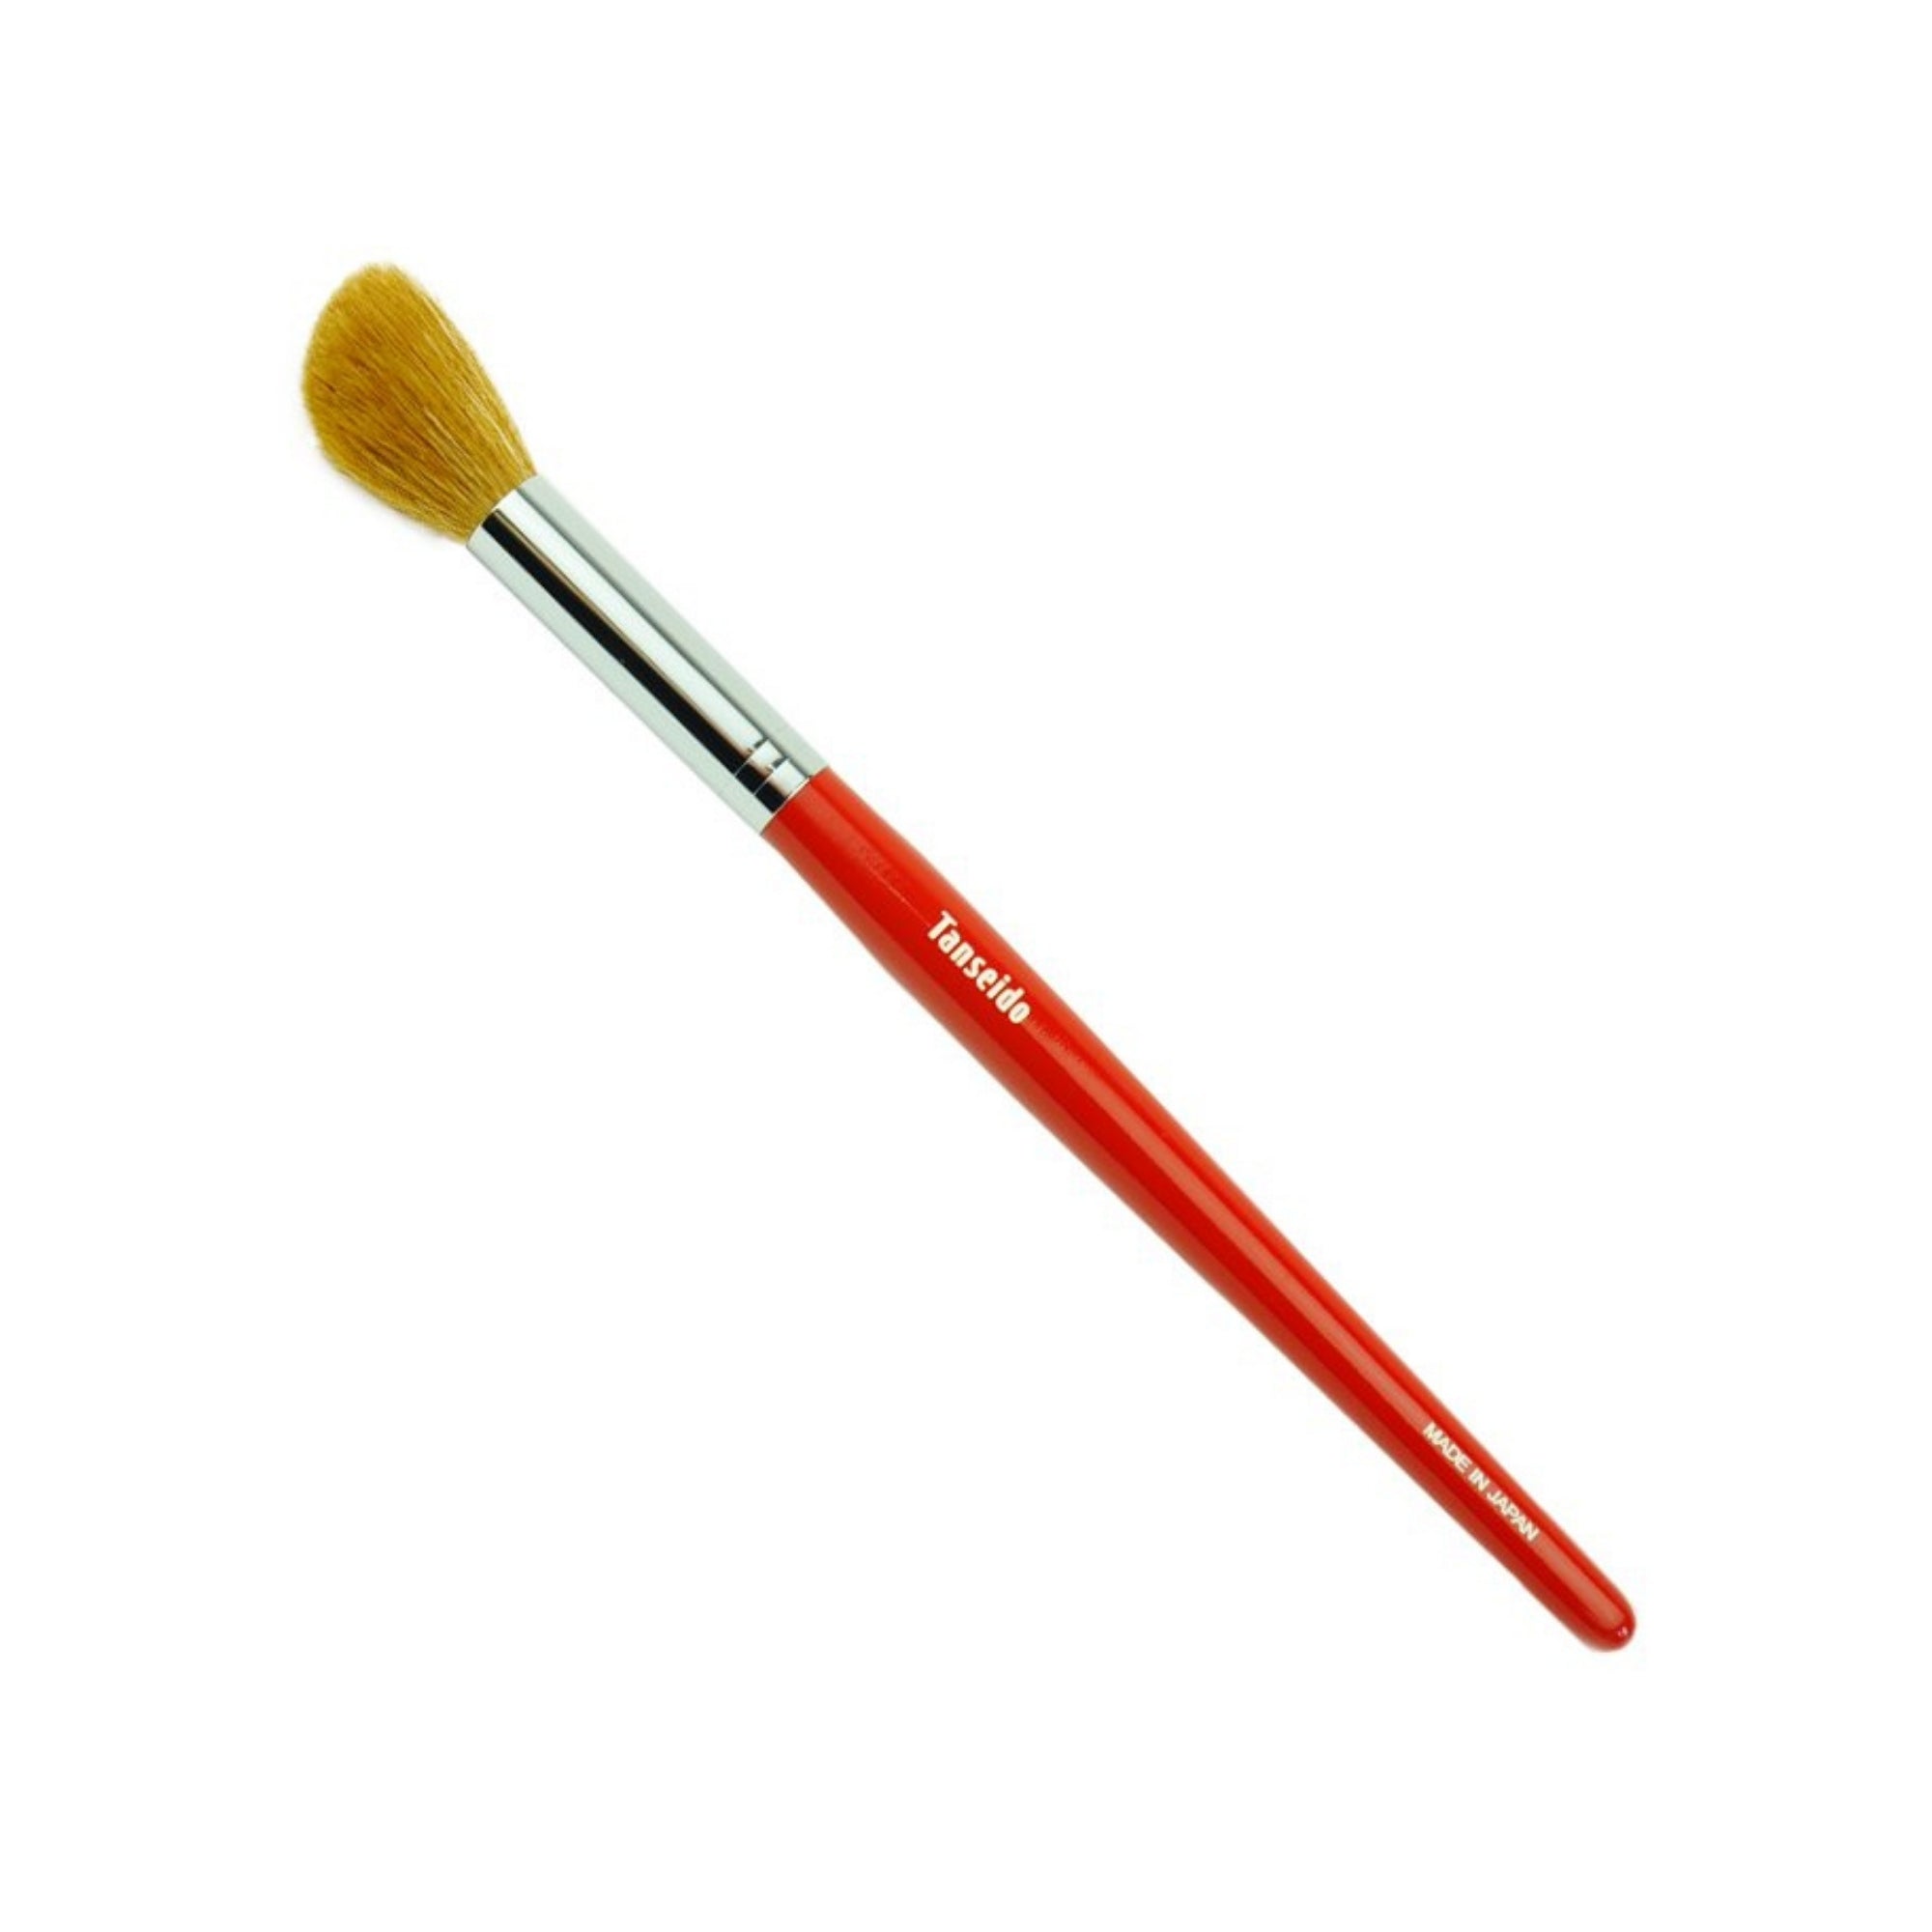 Tanseido Highlight Brush YWS14T - Fude Beauty, Japanese Makeup Brushes